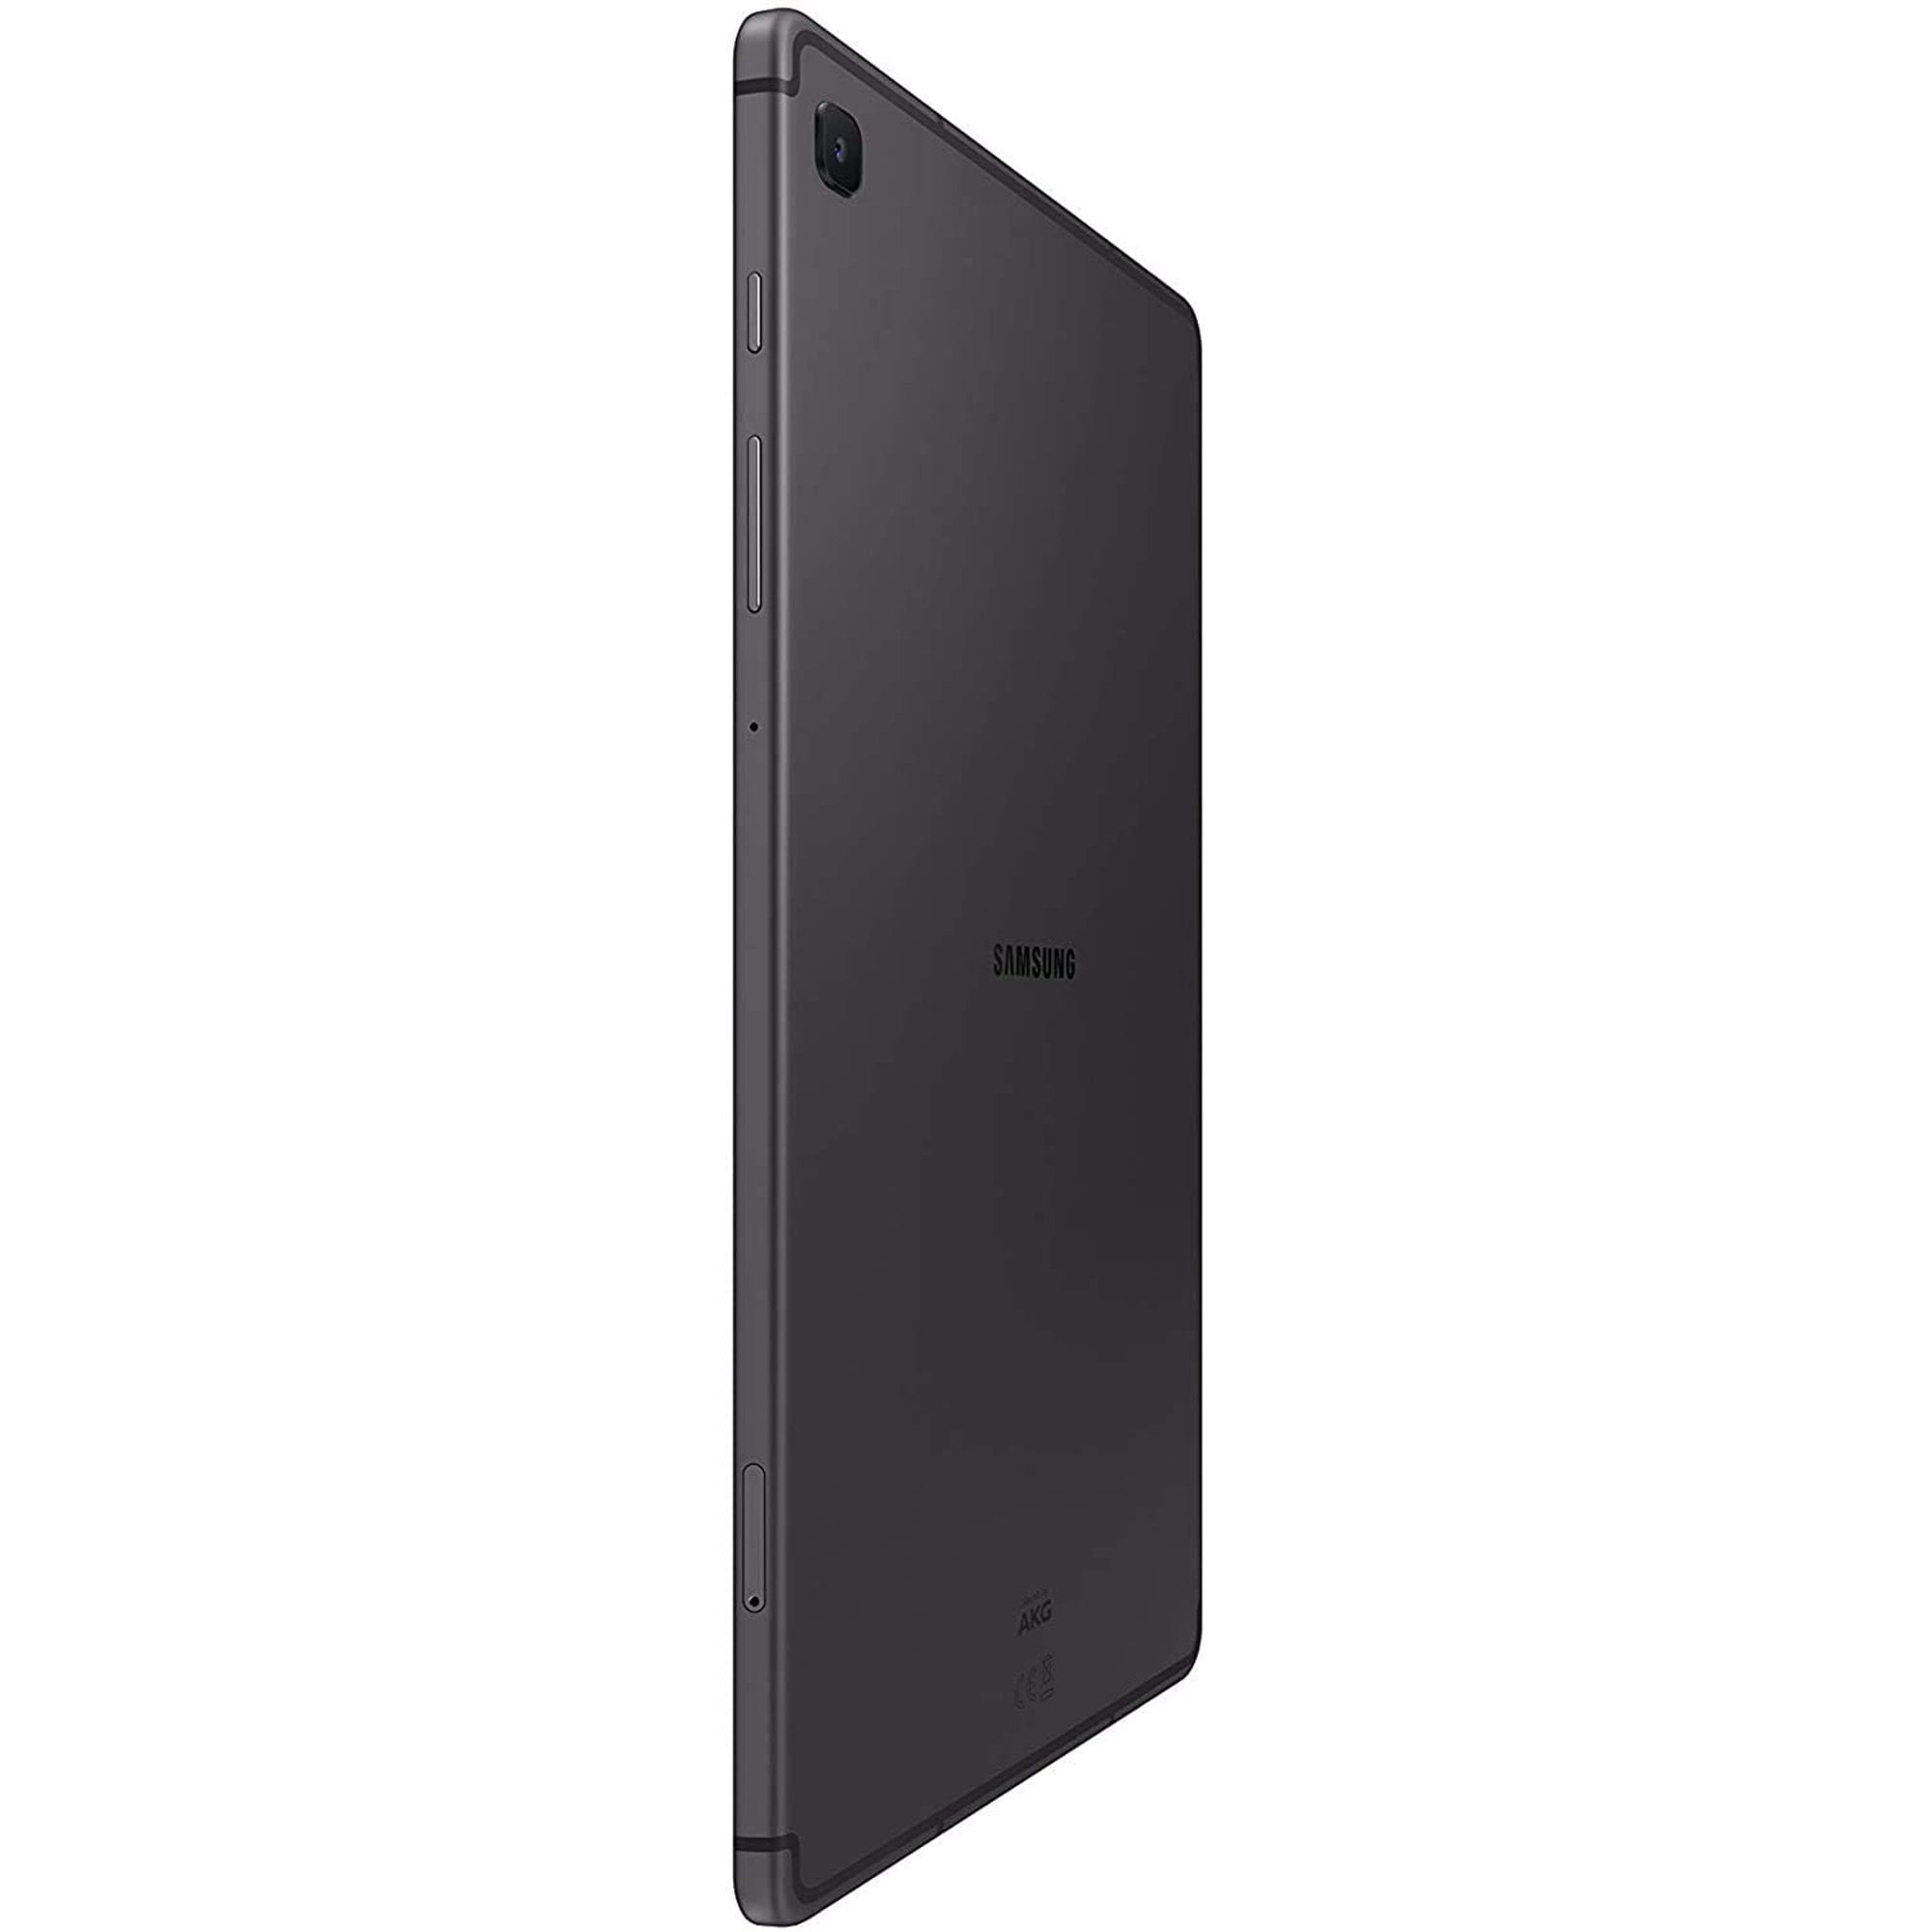 Tablette tactile Samsung Galaxy Tab A 8'' 4G 32 Black - DARTY